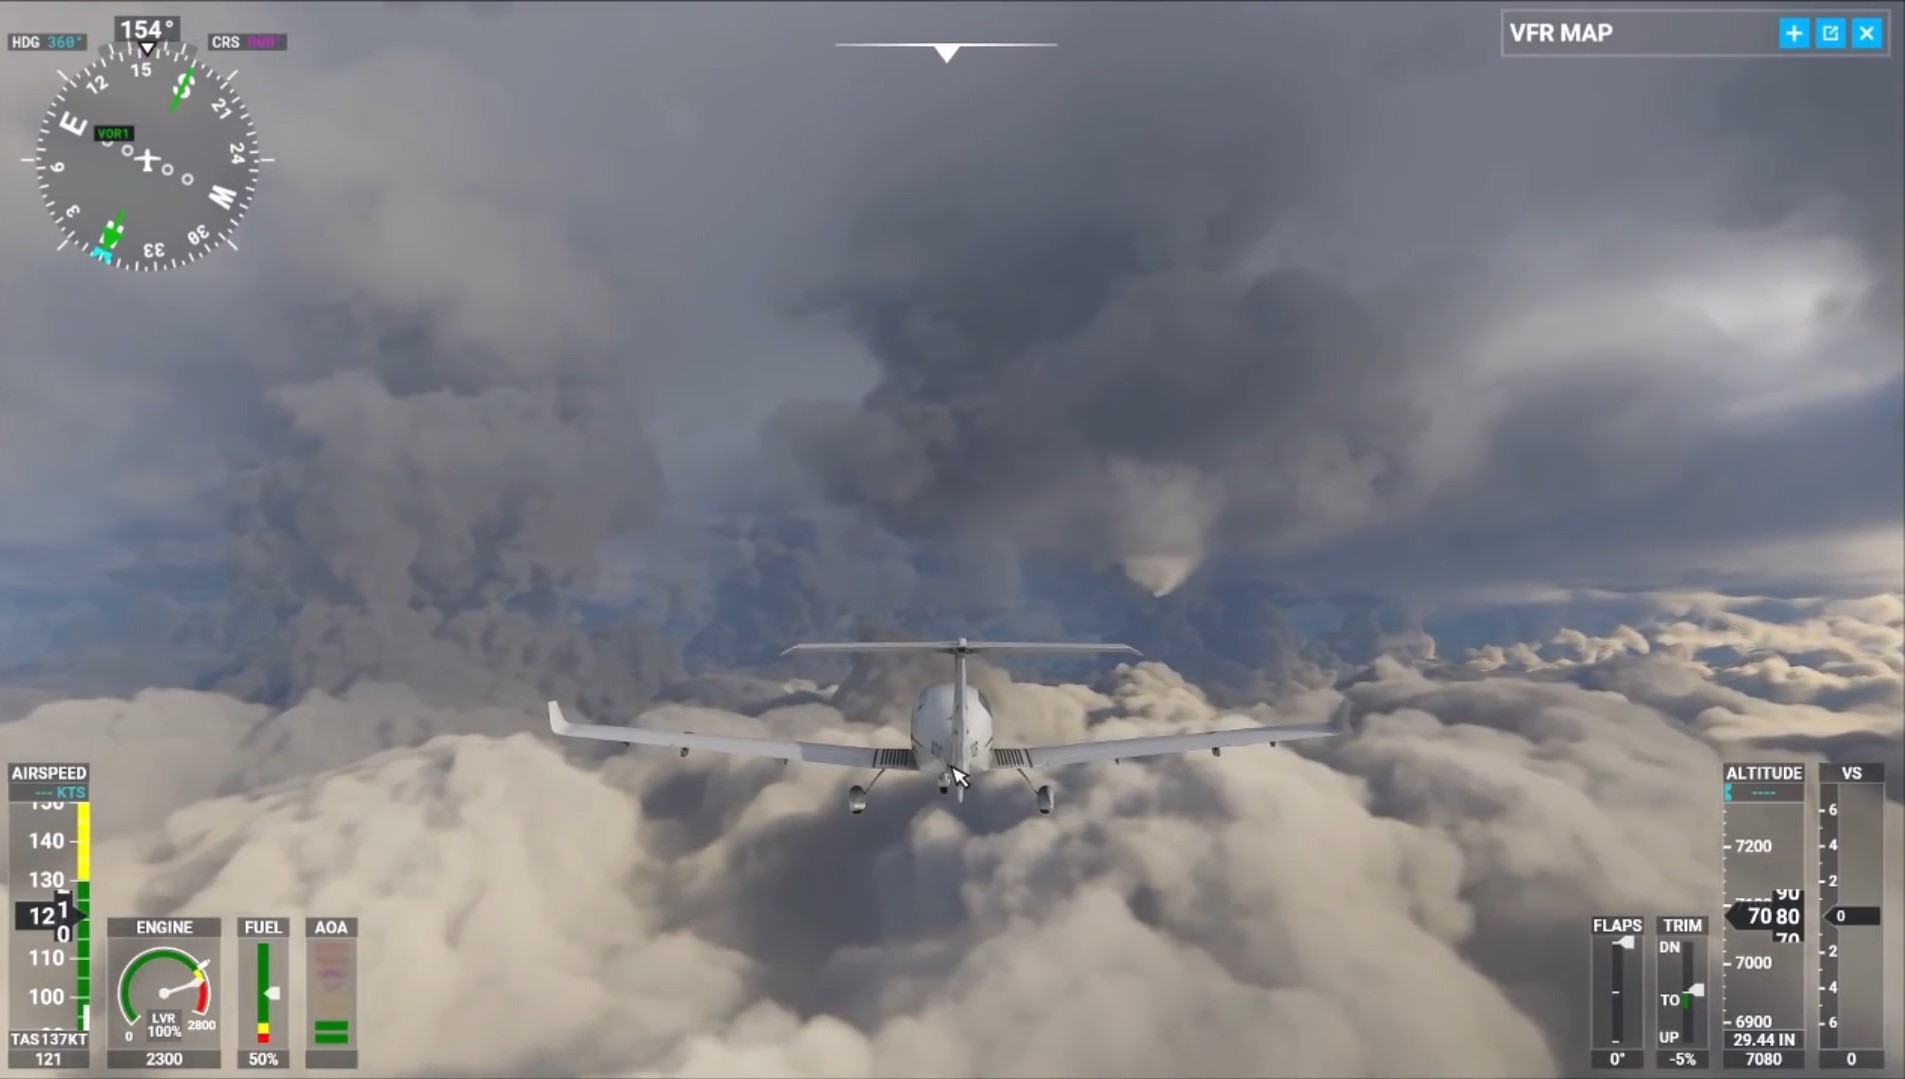 Microsoft Flight Simulator players fly to Hurricane Laura